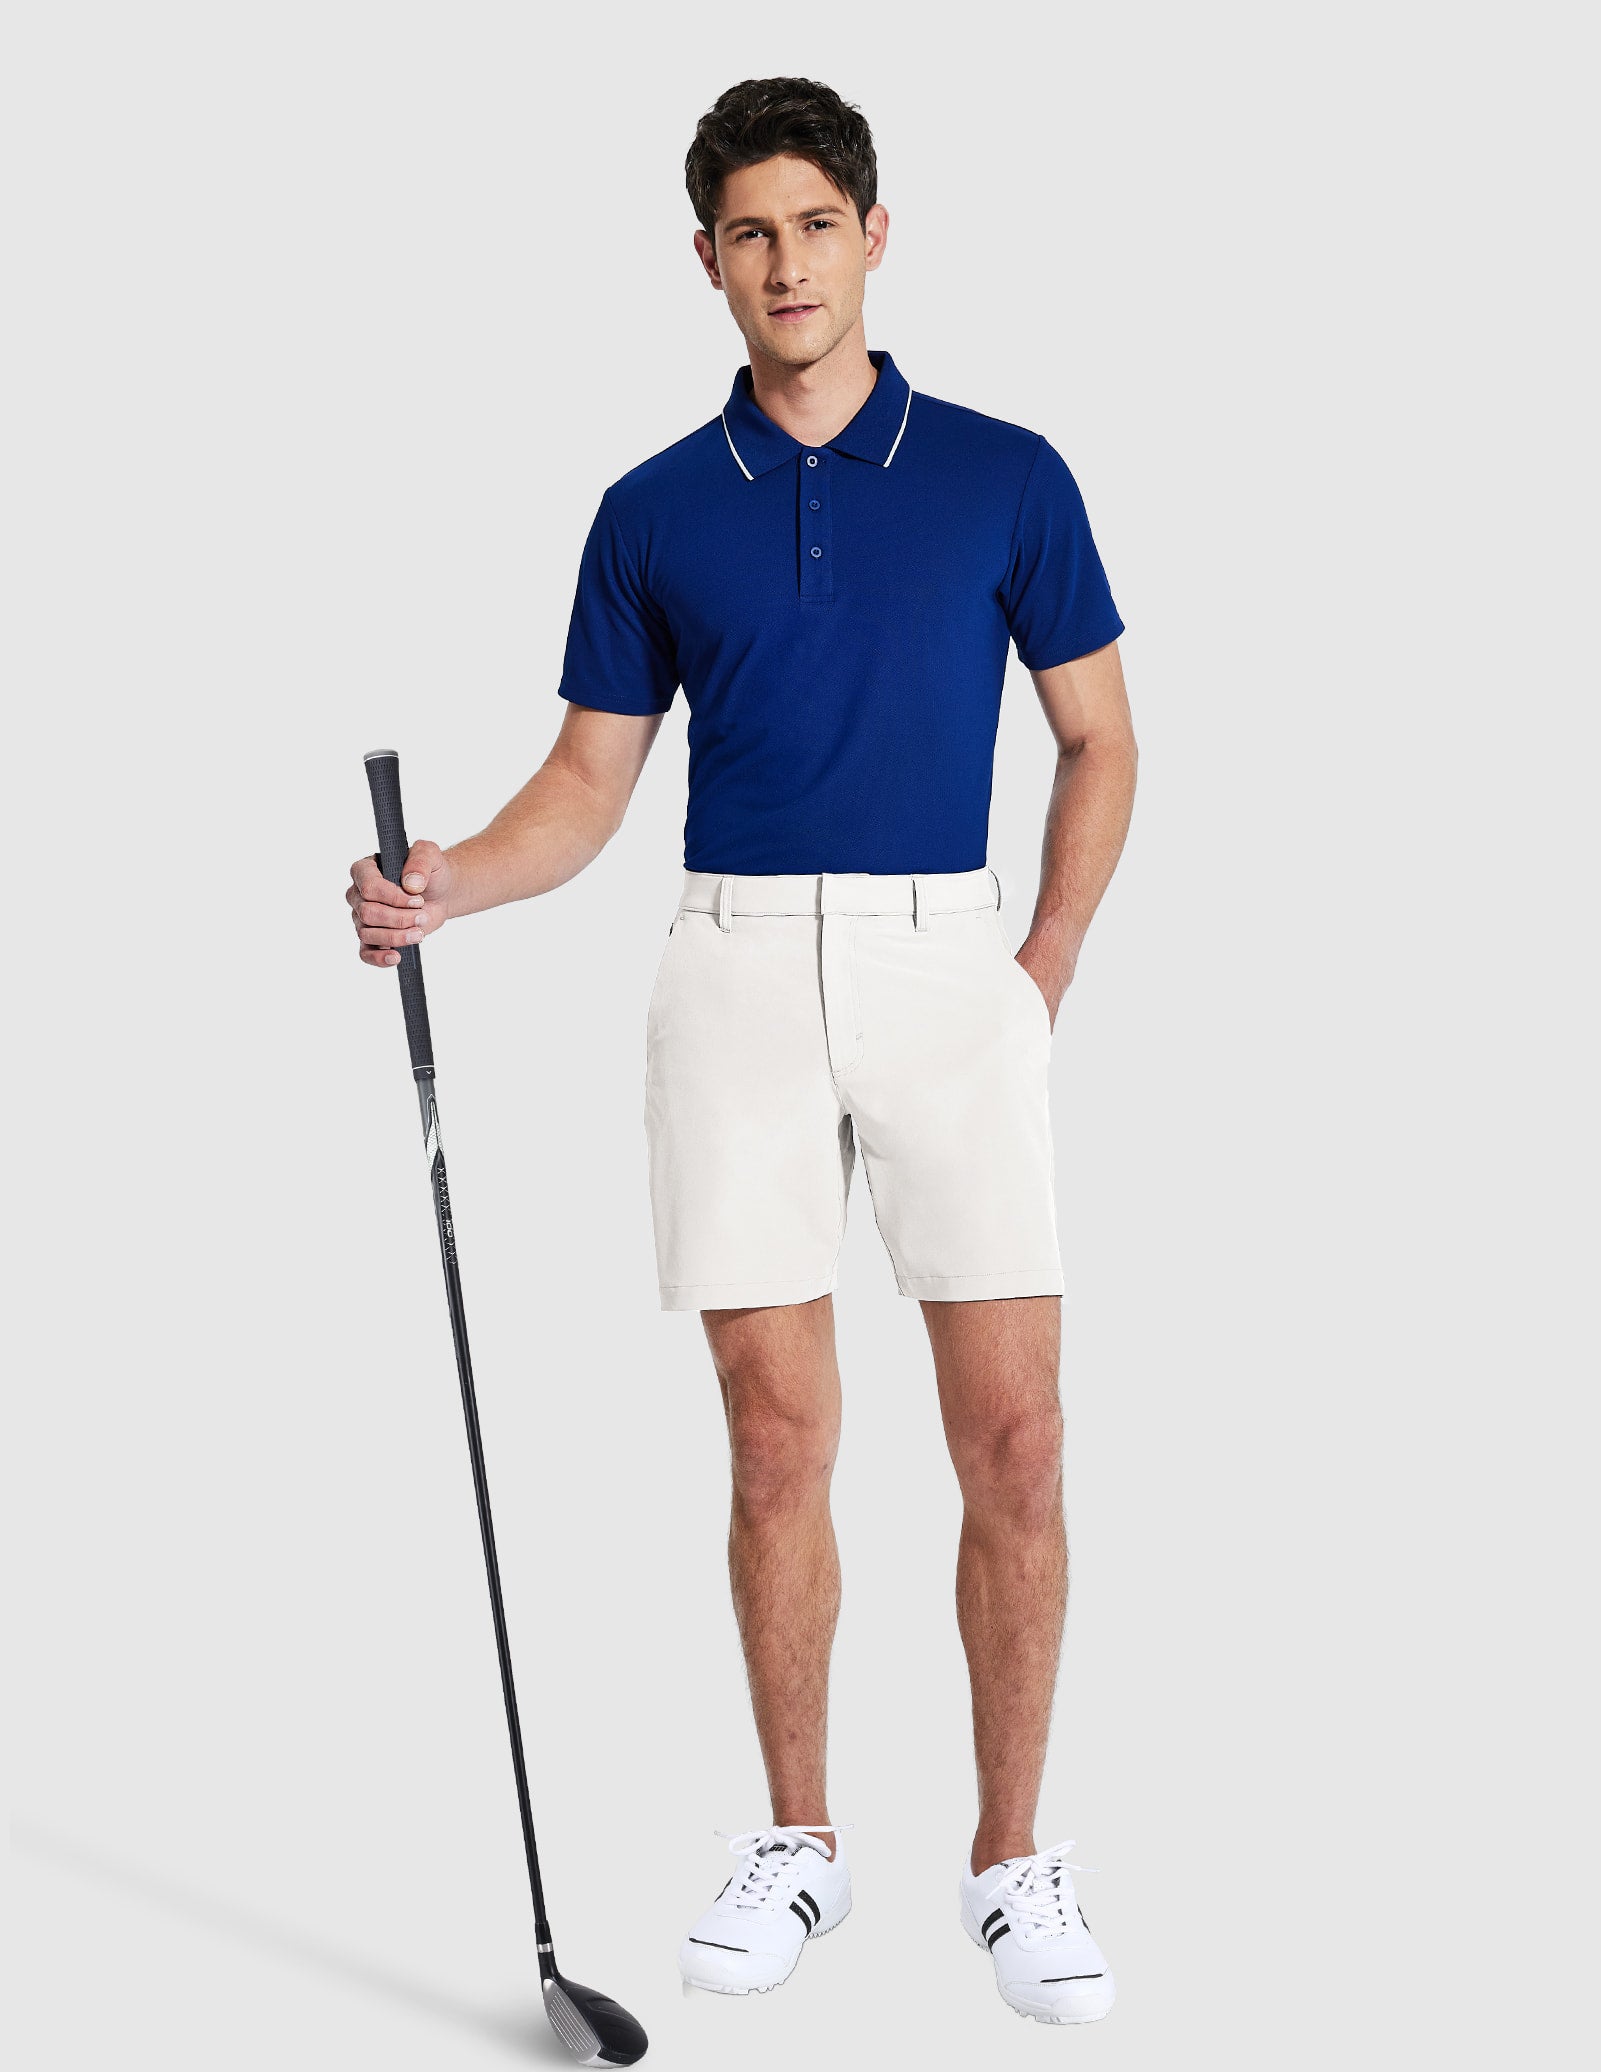 Men's Stretch Golf Shorts 5 Pockets 8" Quick Dry Shorts